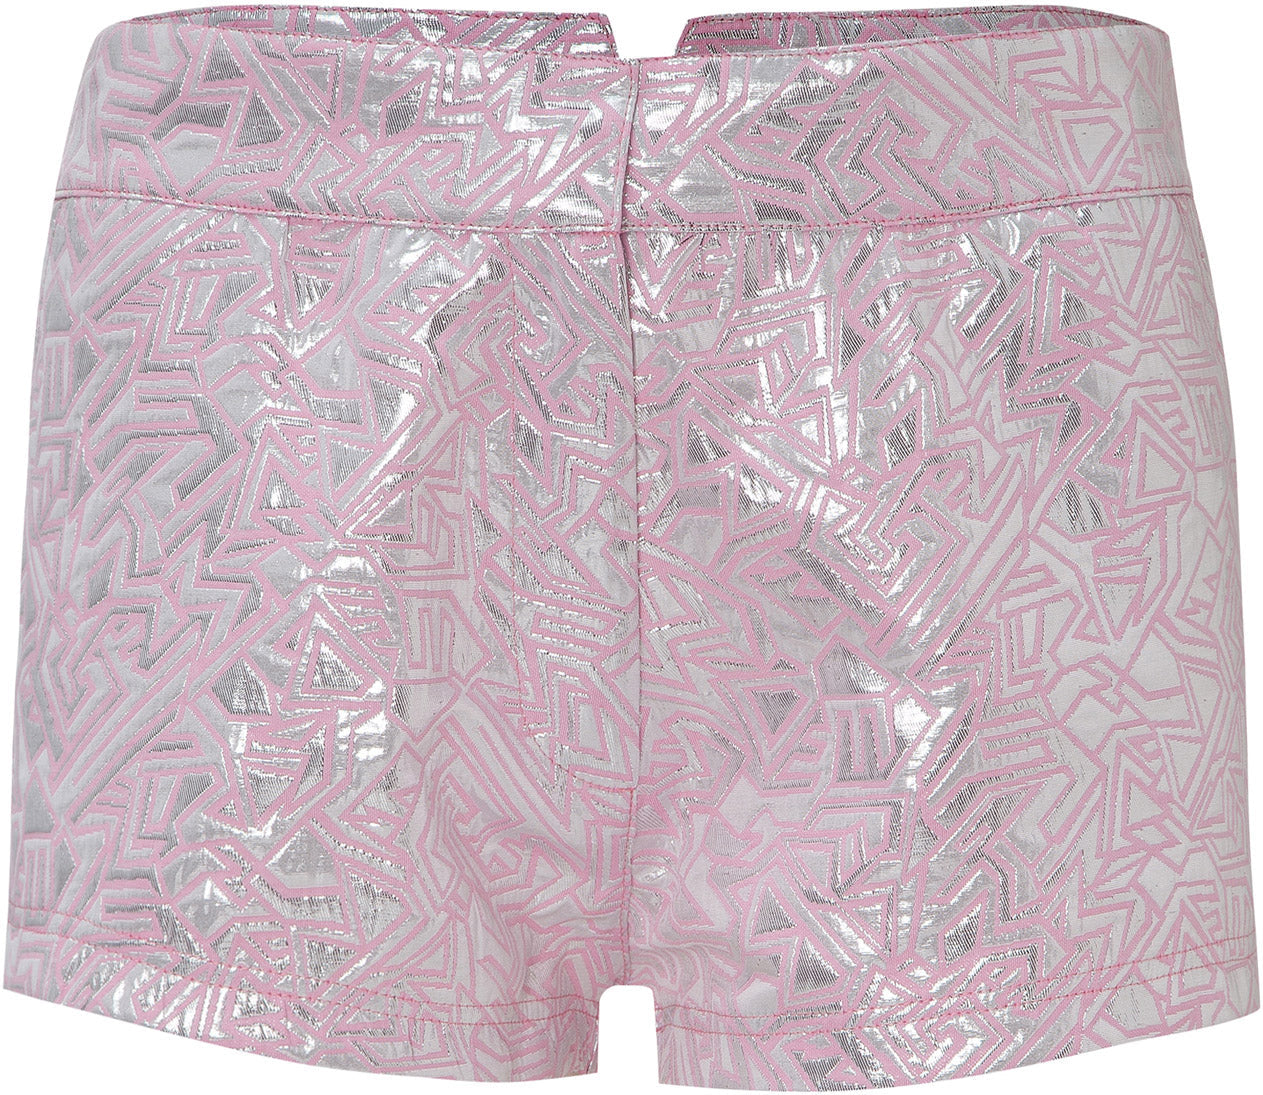 Aztec Summer Hot Pants Pink-Rose